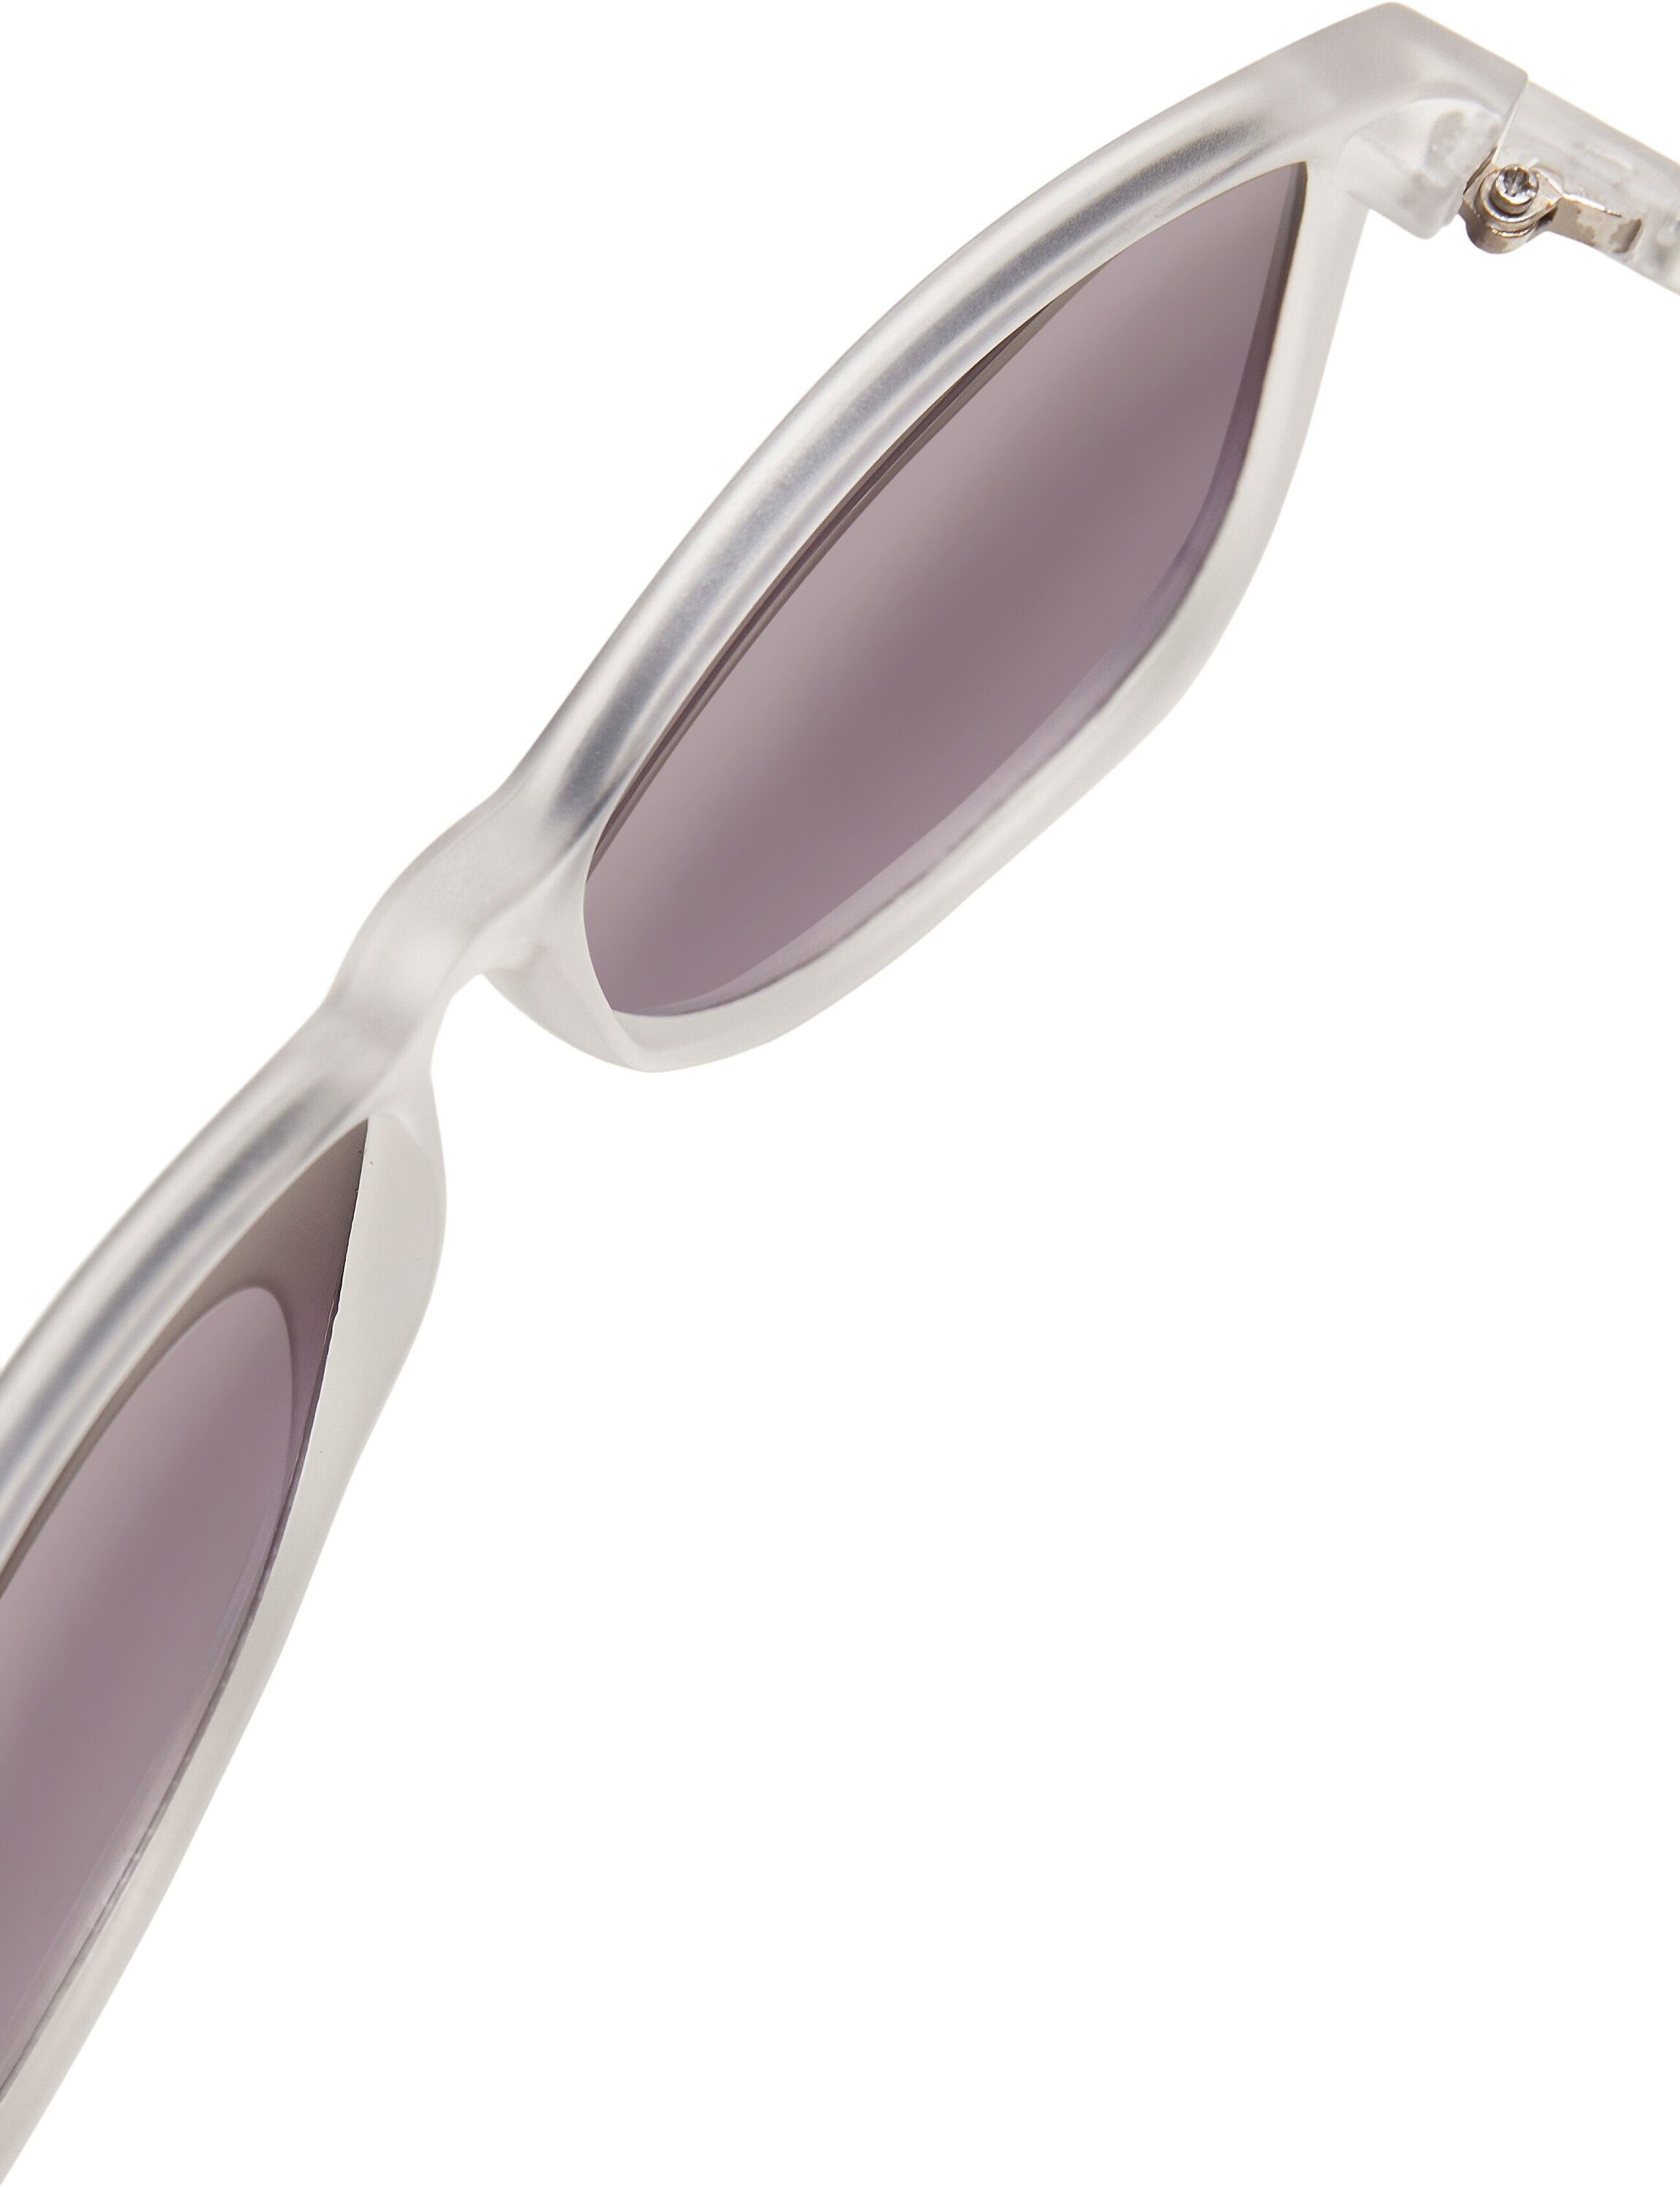 clear URBAN Sonnenbrille CLASSICS Chirwa Accessoires UC Sunglasses